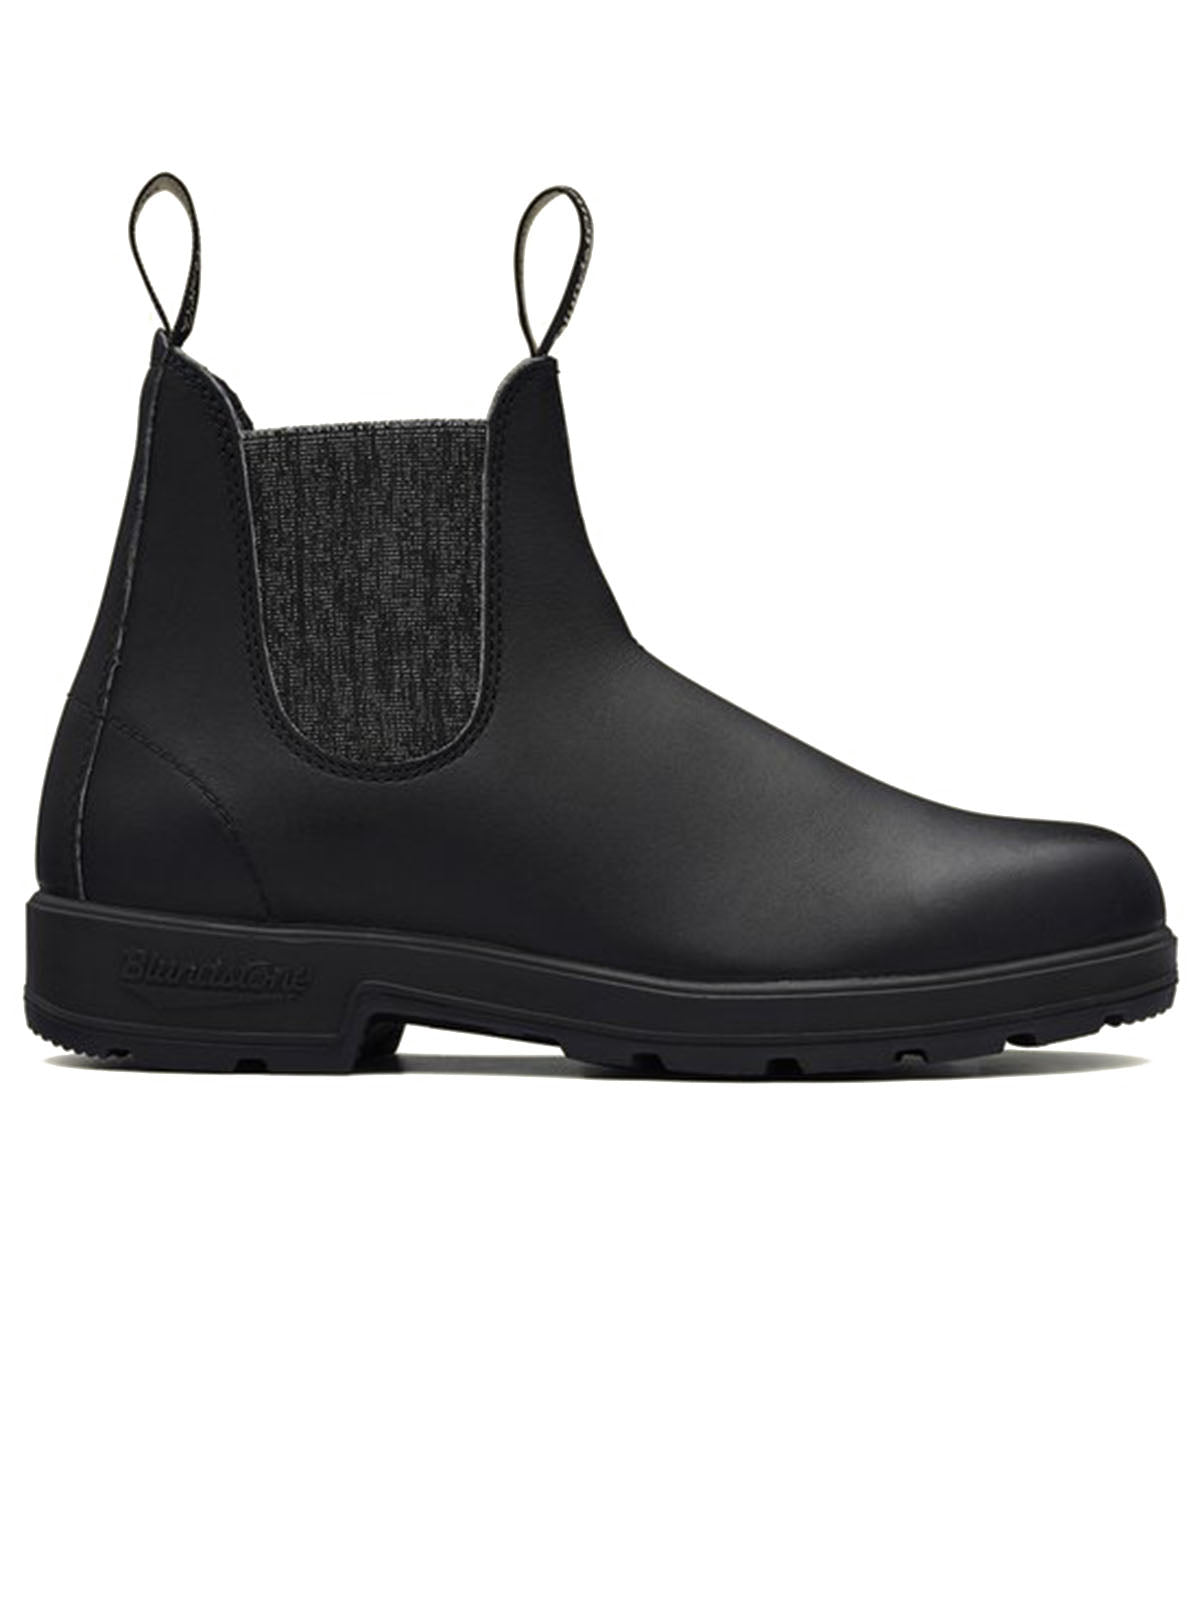 Stivali Donna Blundstone - 2032 Premium Leather Lined Elastic Sided Boot - Nero